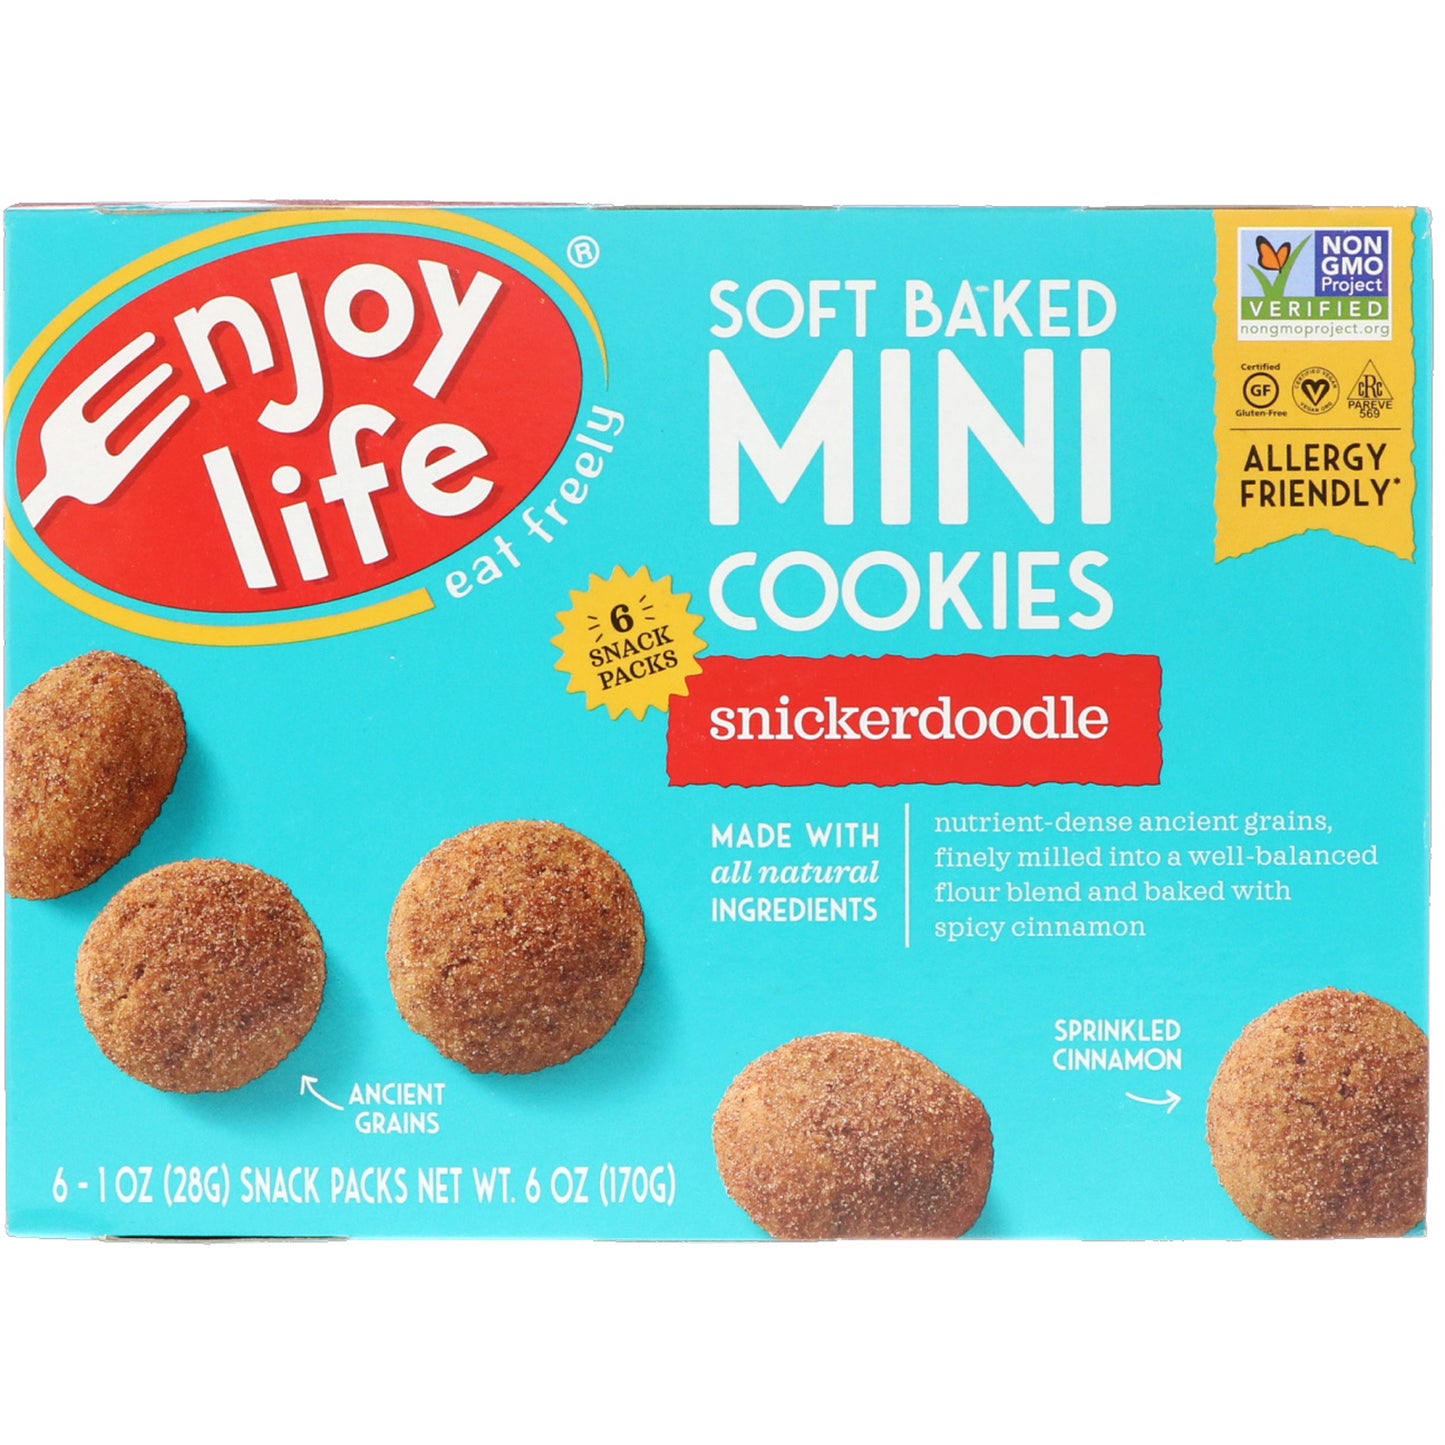 Mini Cookies - Samples - Enjoy Life